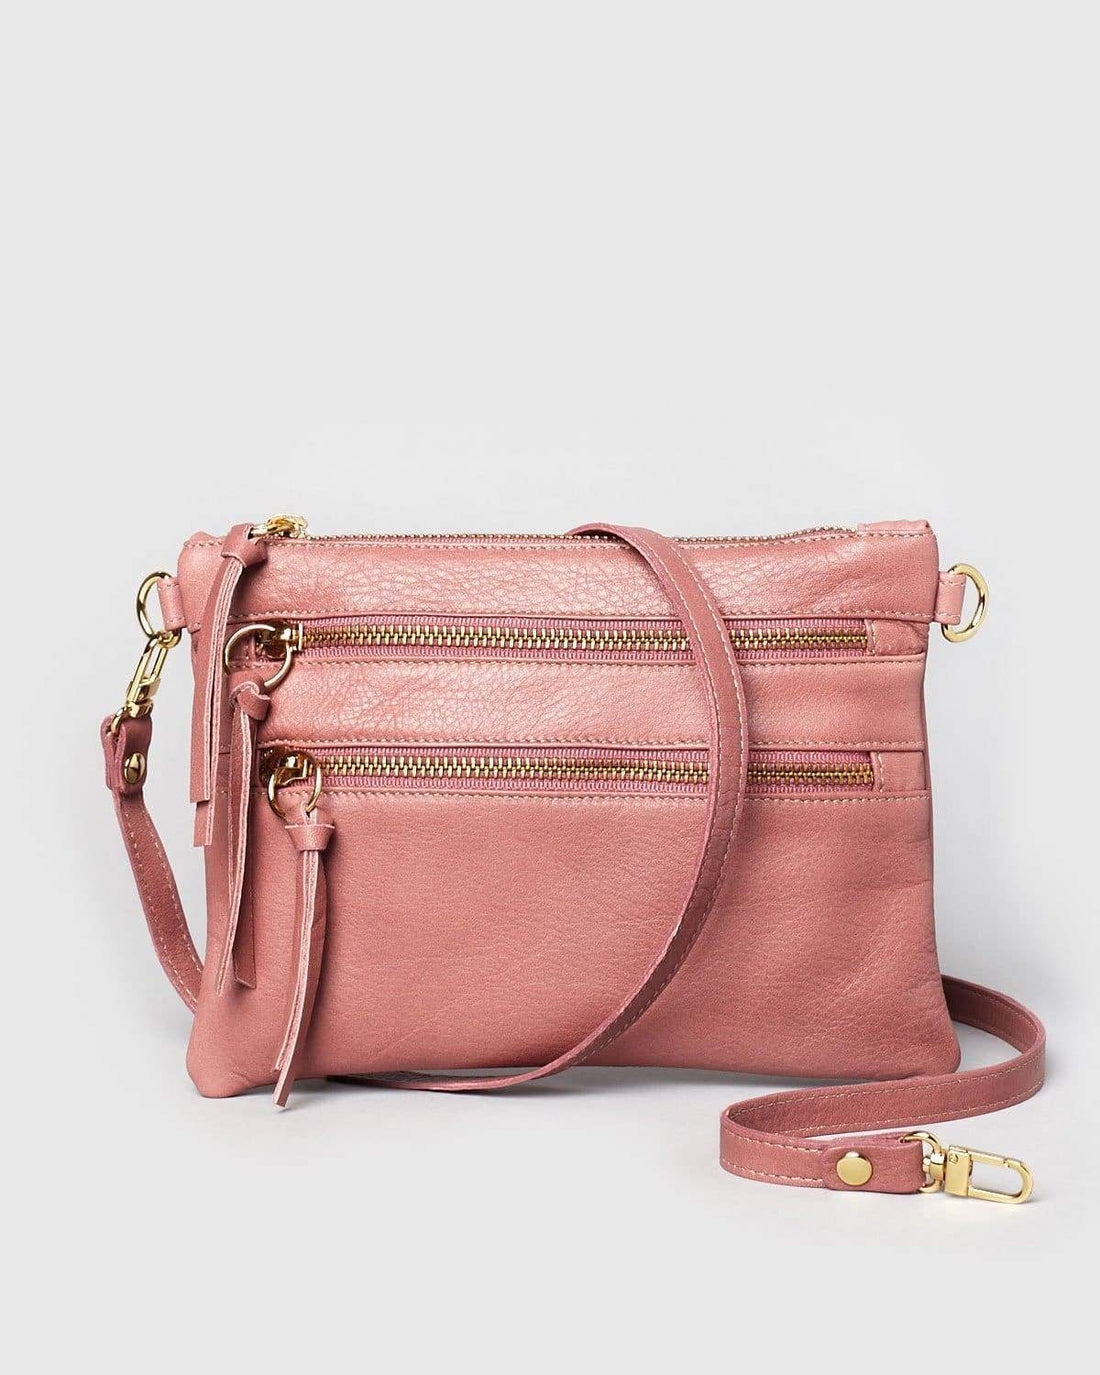 Essex - Rose Leather Handbag Made in NYC | Pietro NYC